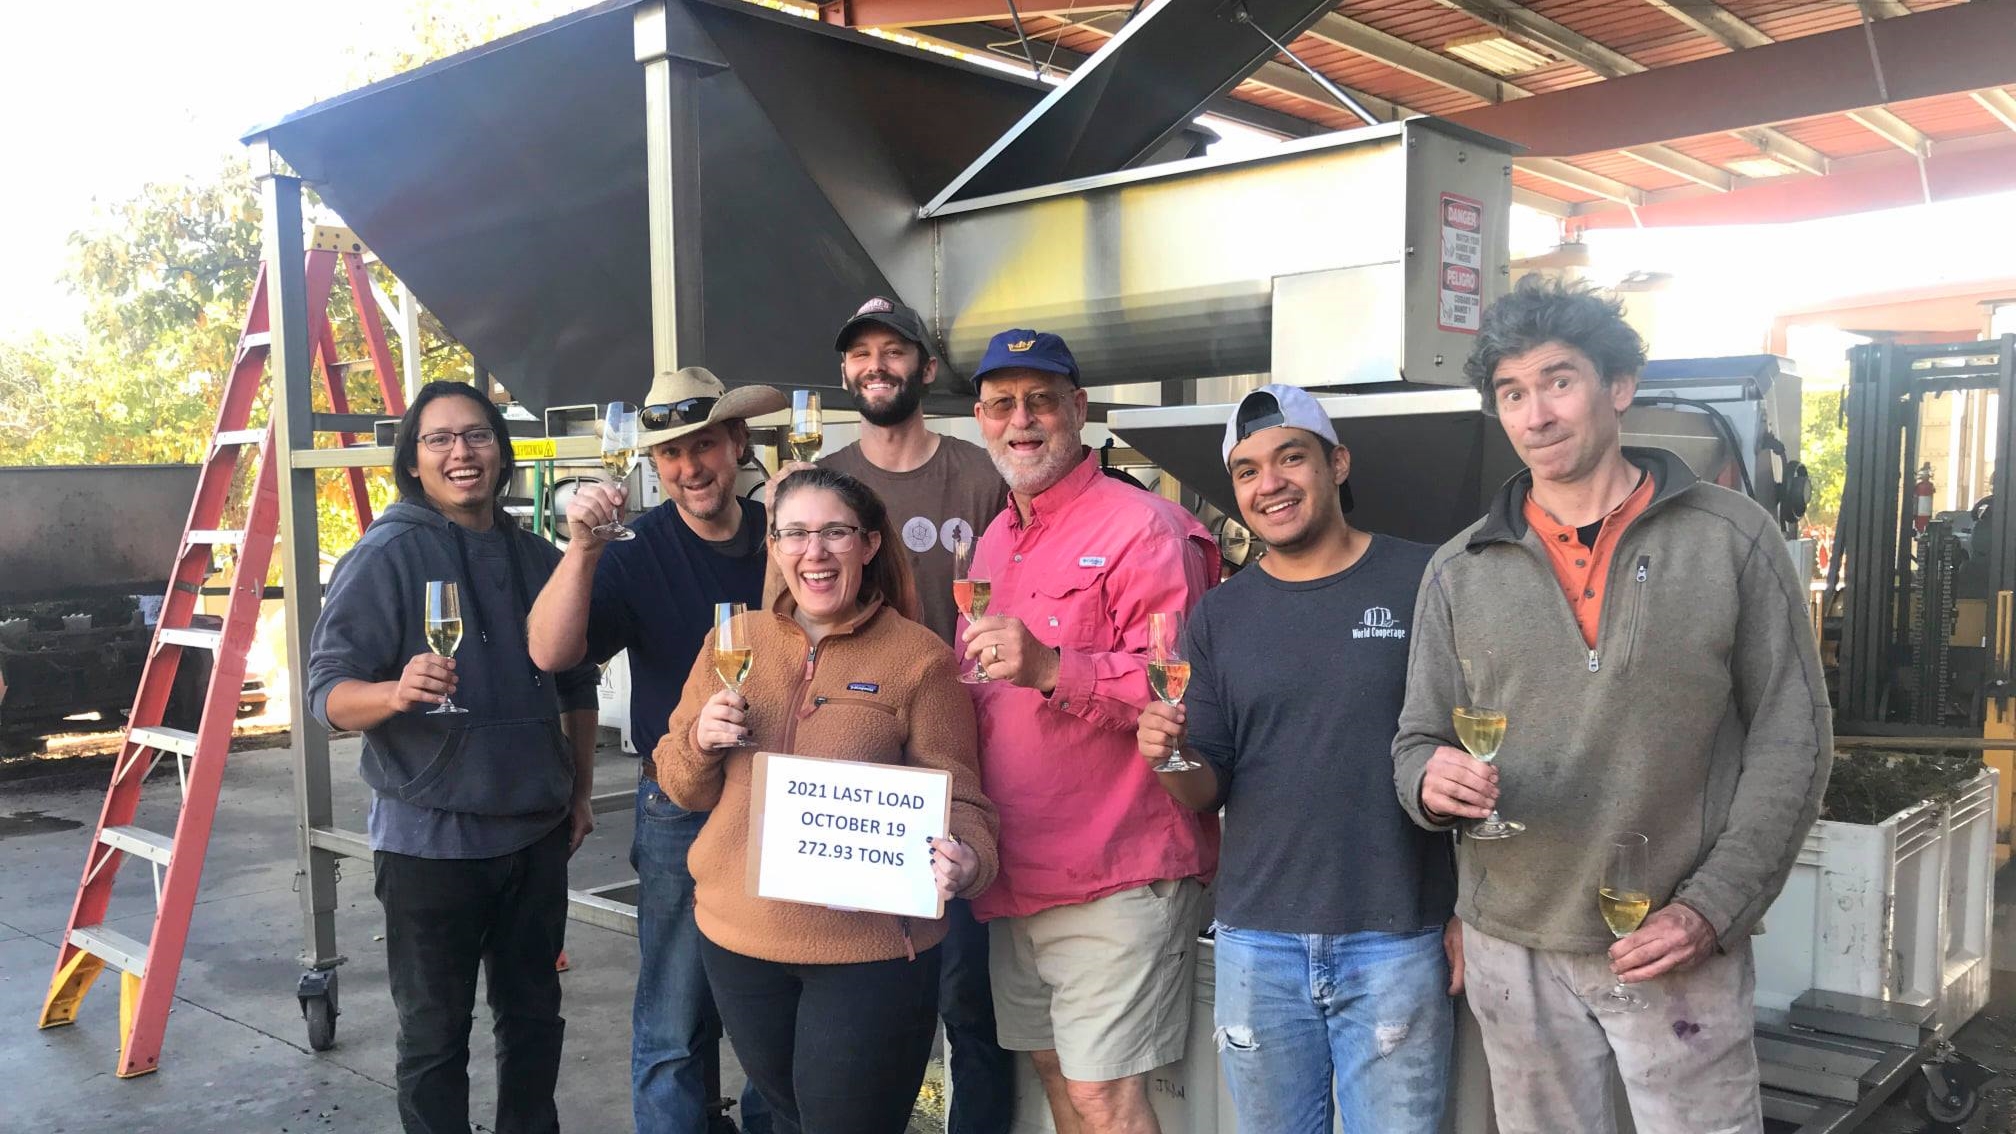 Jeff Runquist Harvest Crew 2021 - winning winery of the year